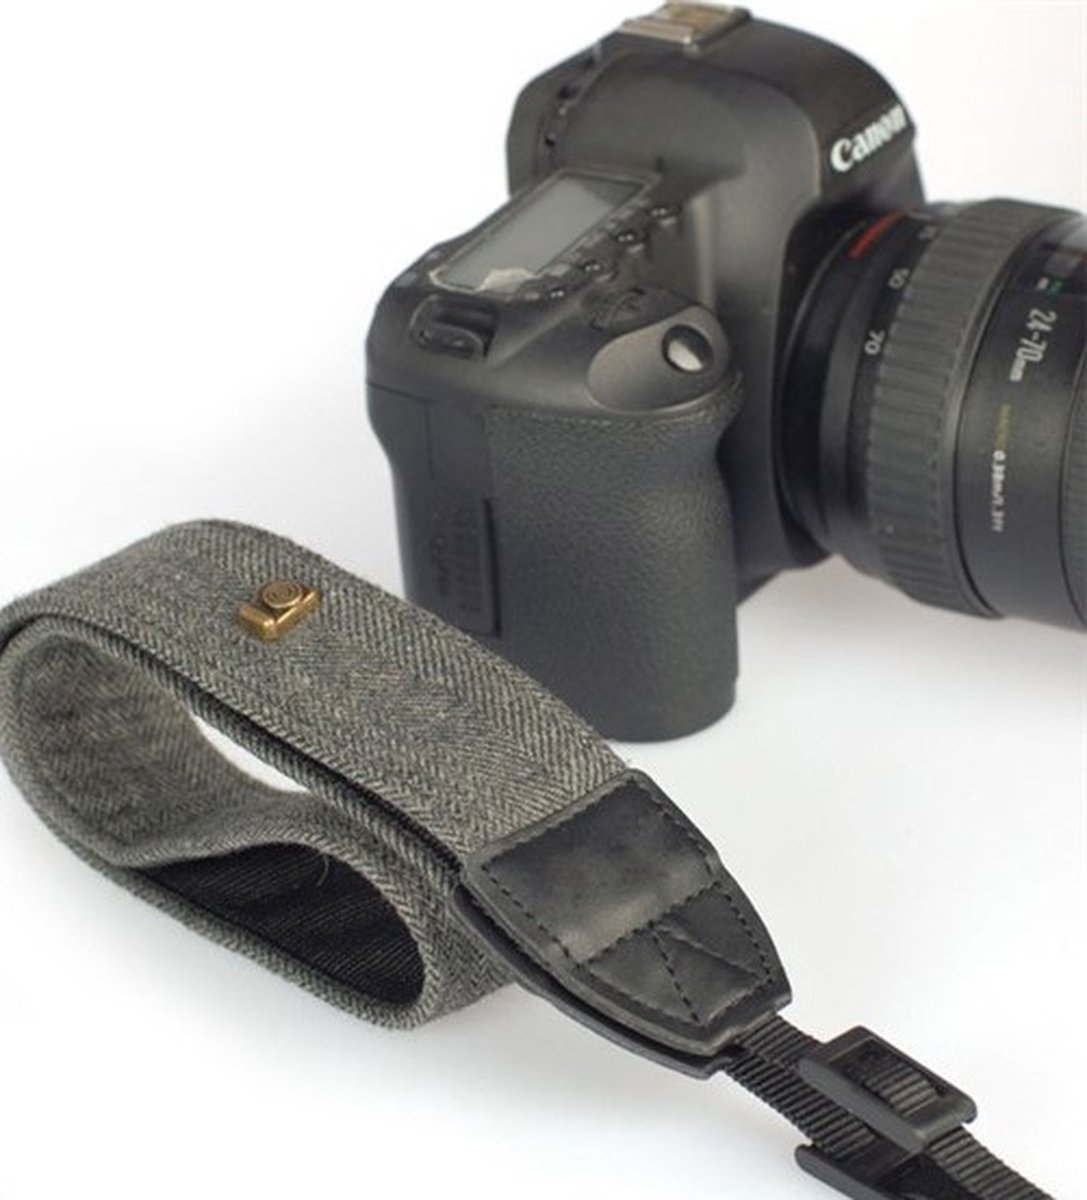 Techvavo® Retro Vintage Verstelbare Schouderband voor Digitale en Spiegelreflex Camera - Bruin